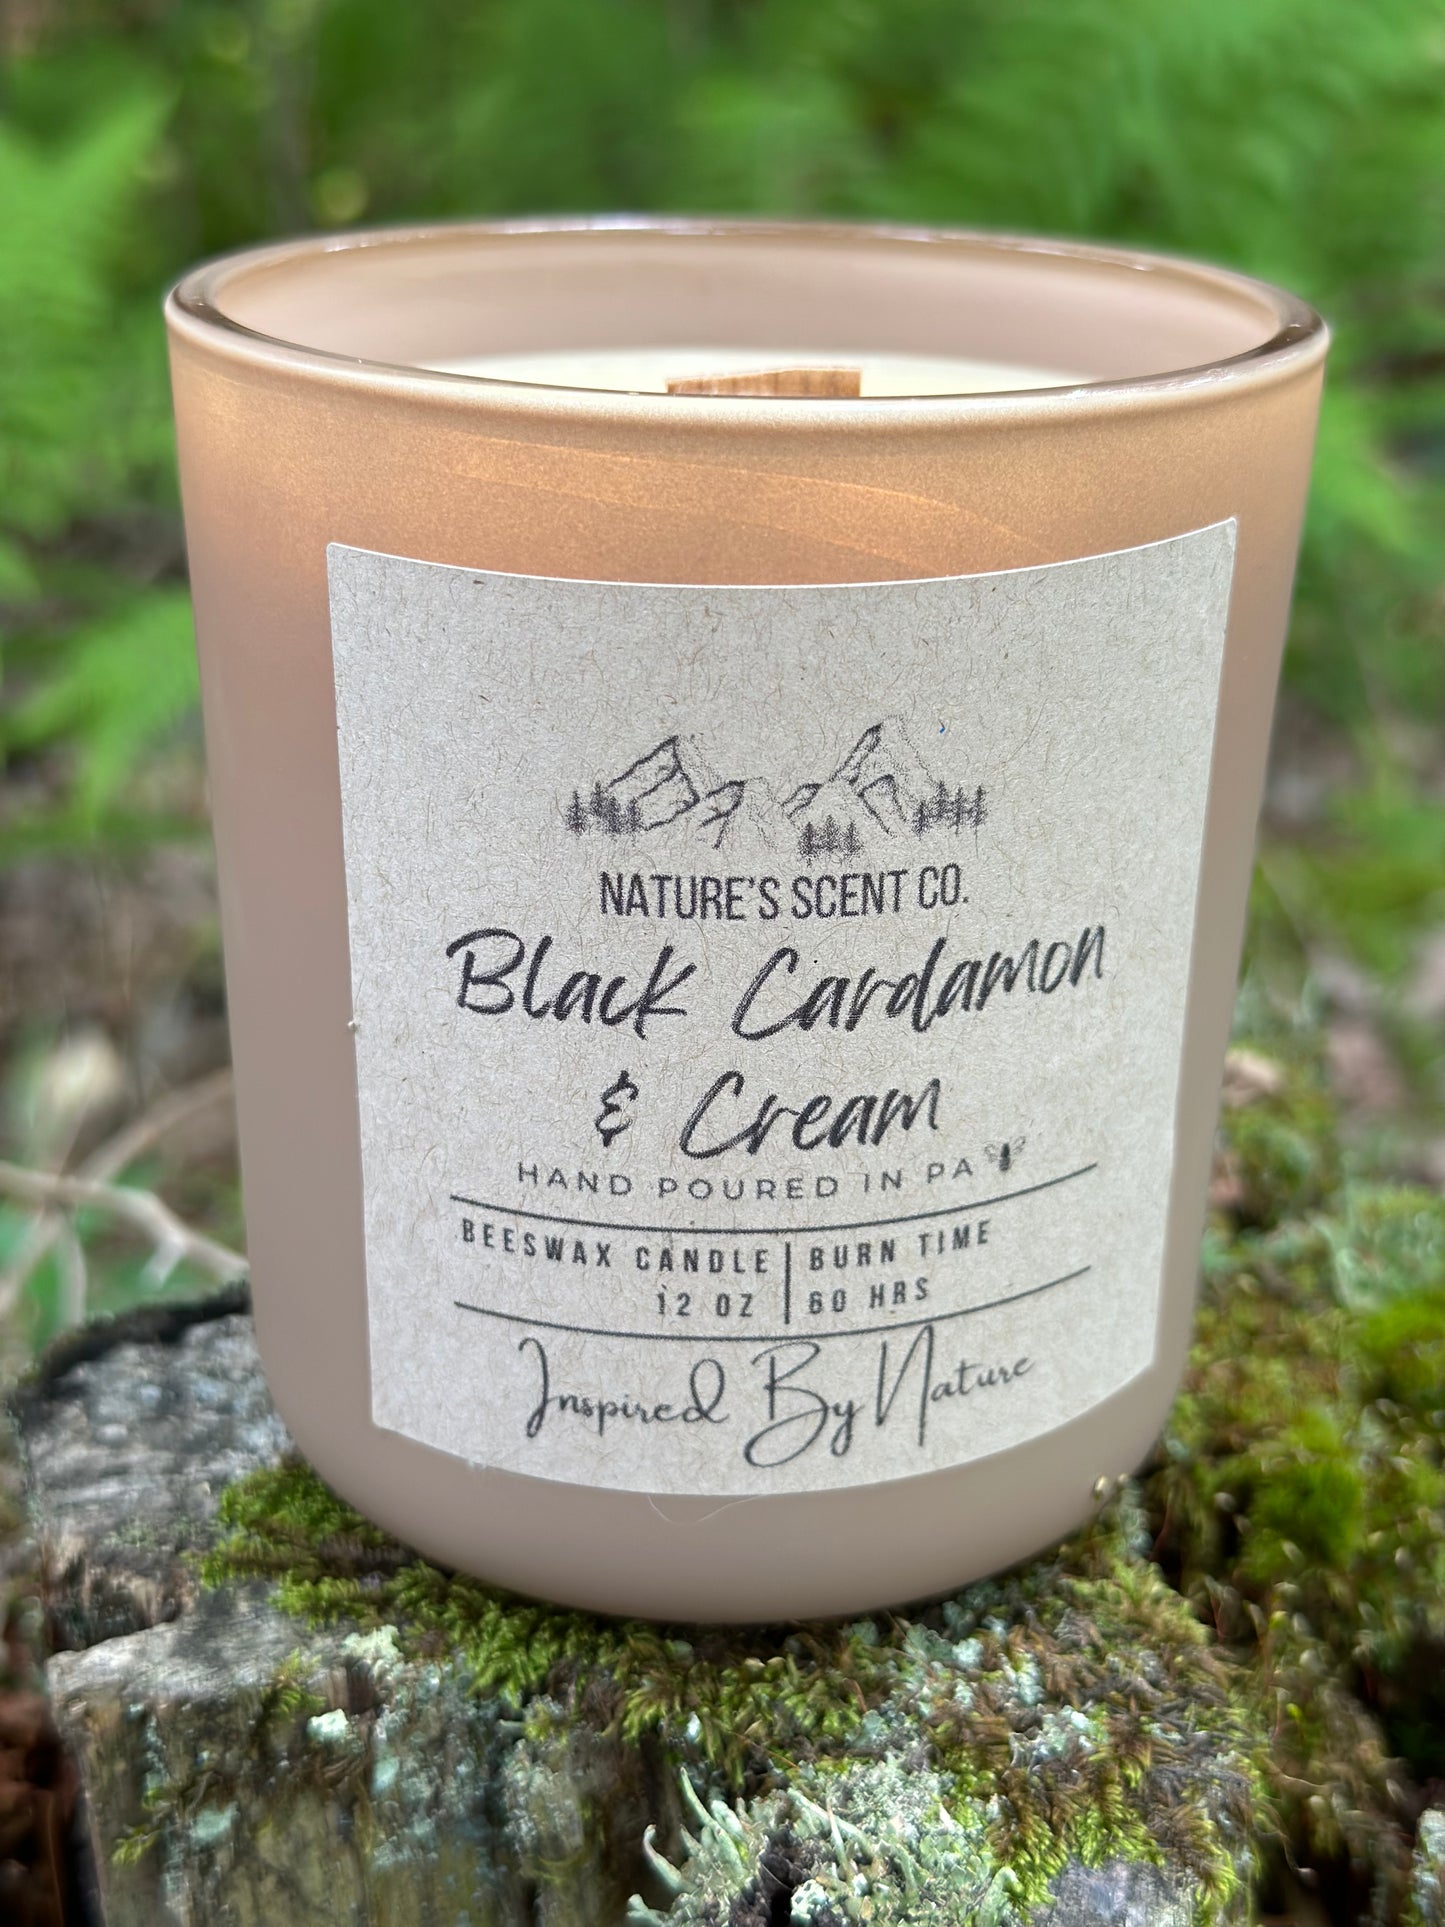 Black Cardamon & Cream Beeswax Candle